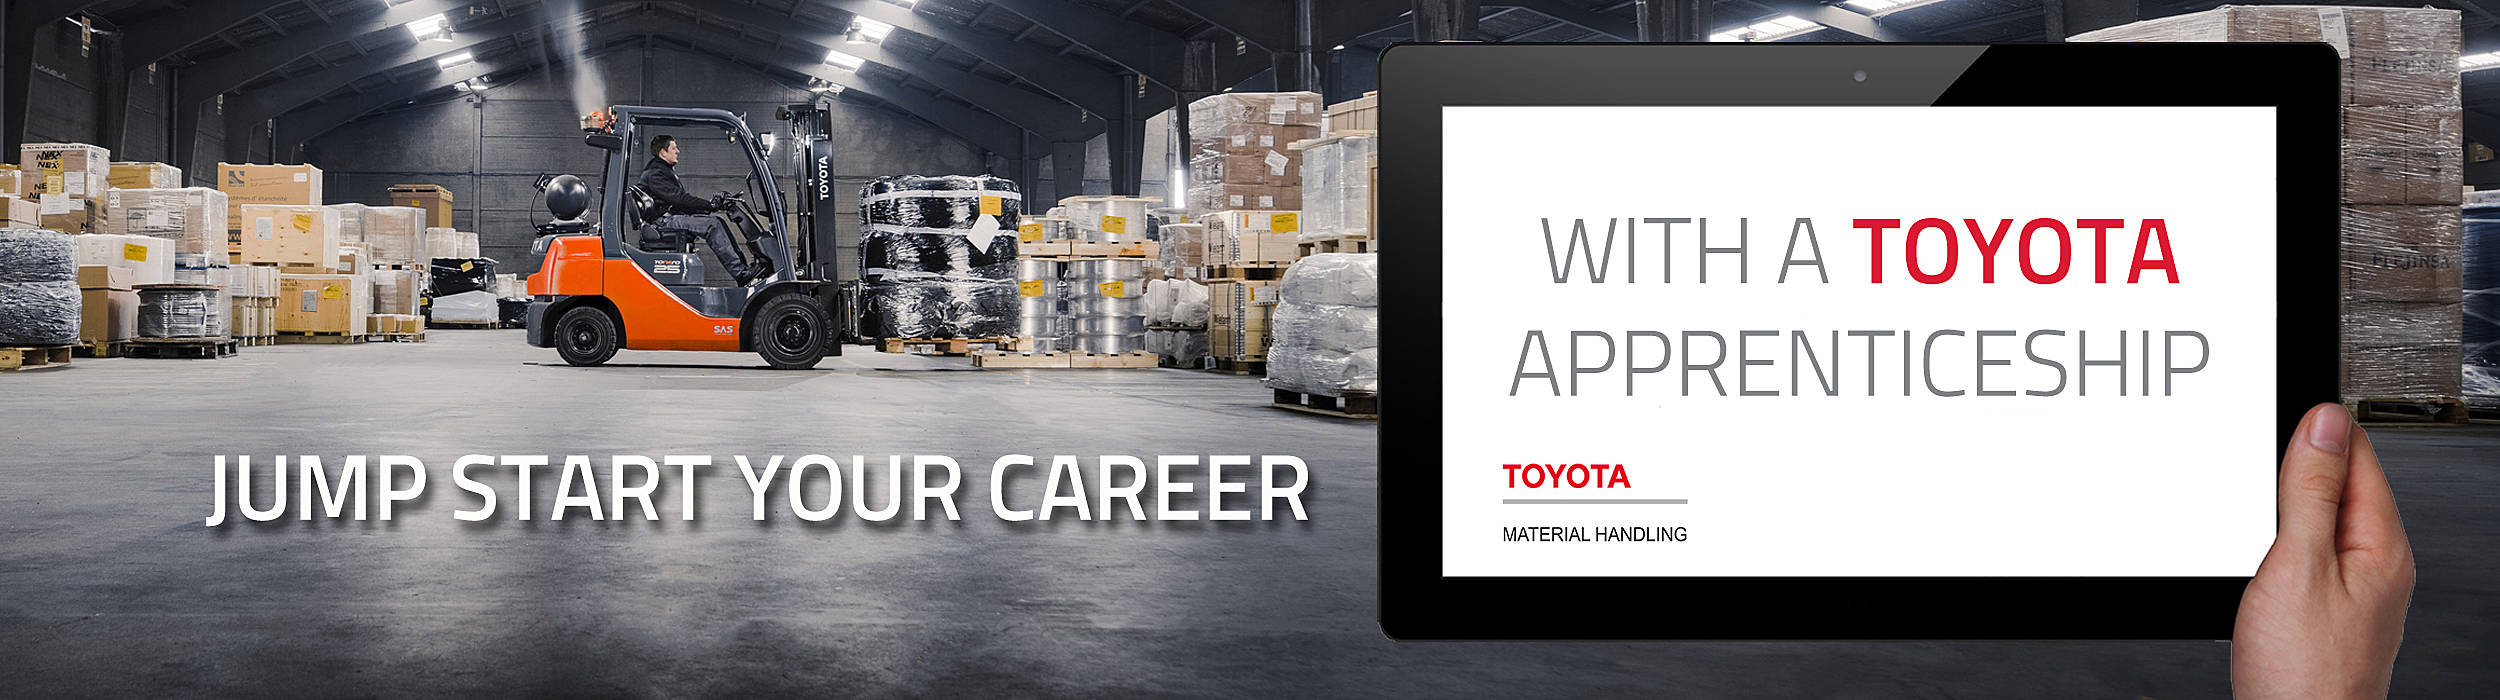 Toyota Apprenticeships Toyota Material Handling UK